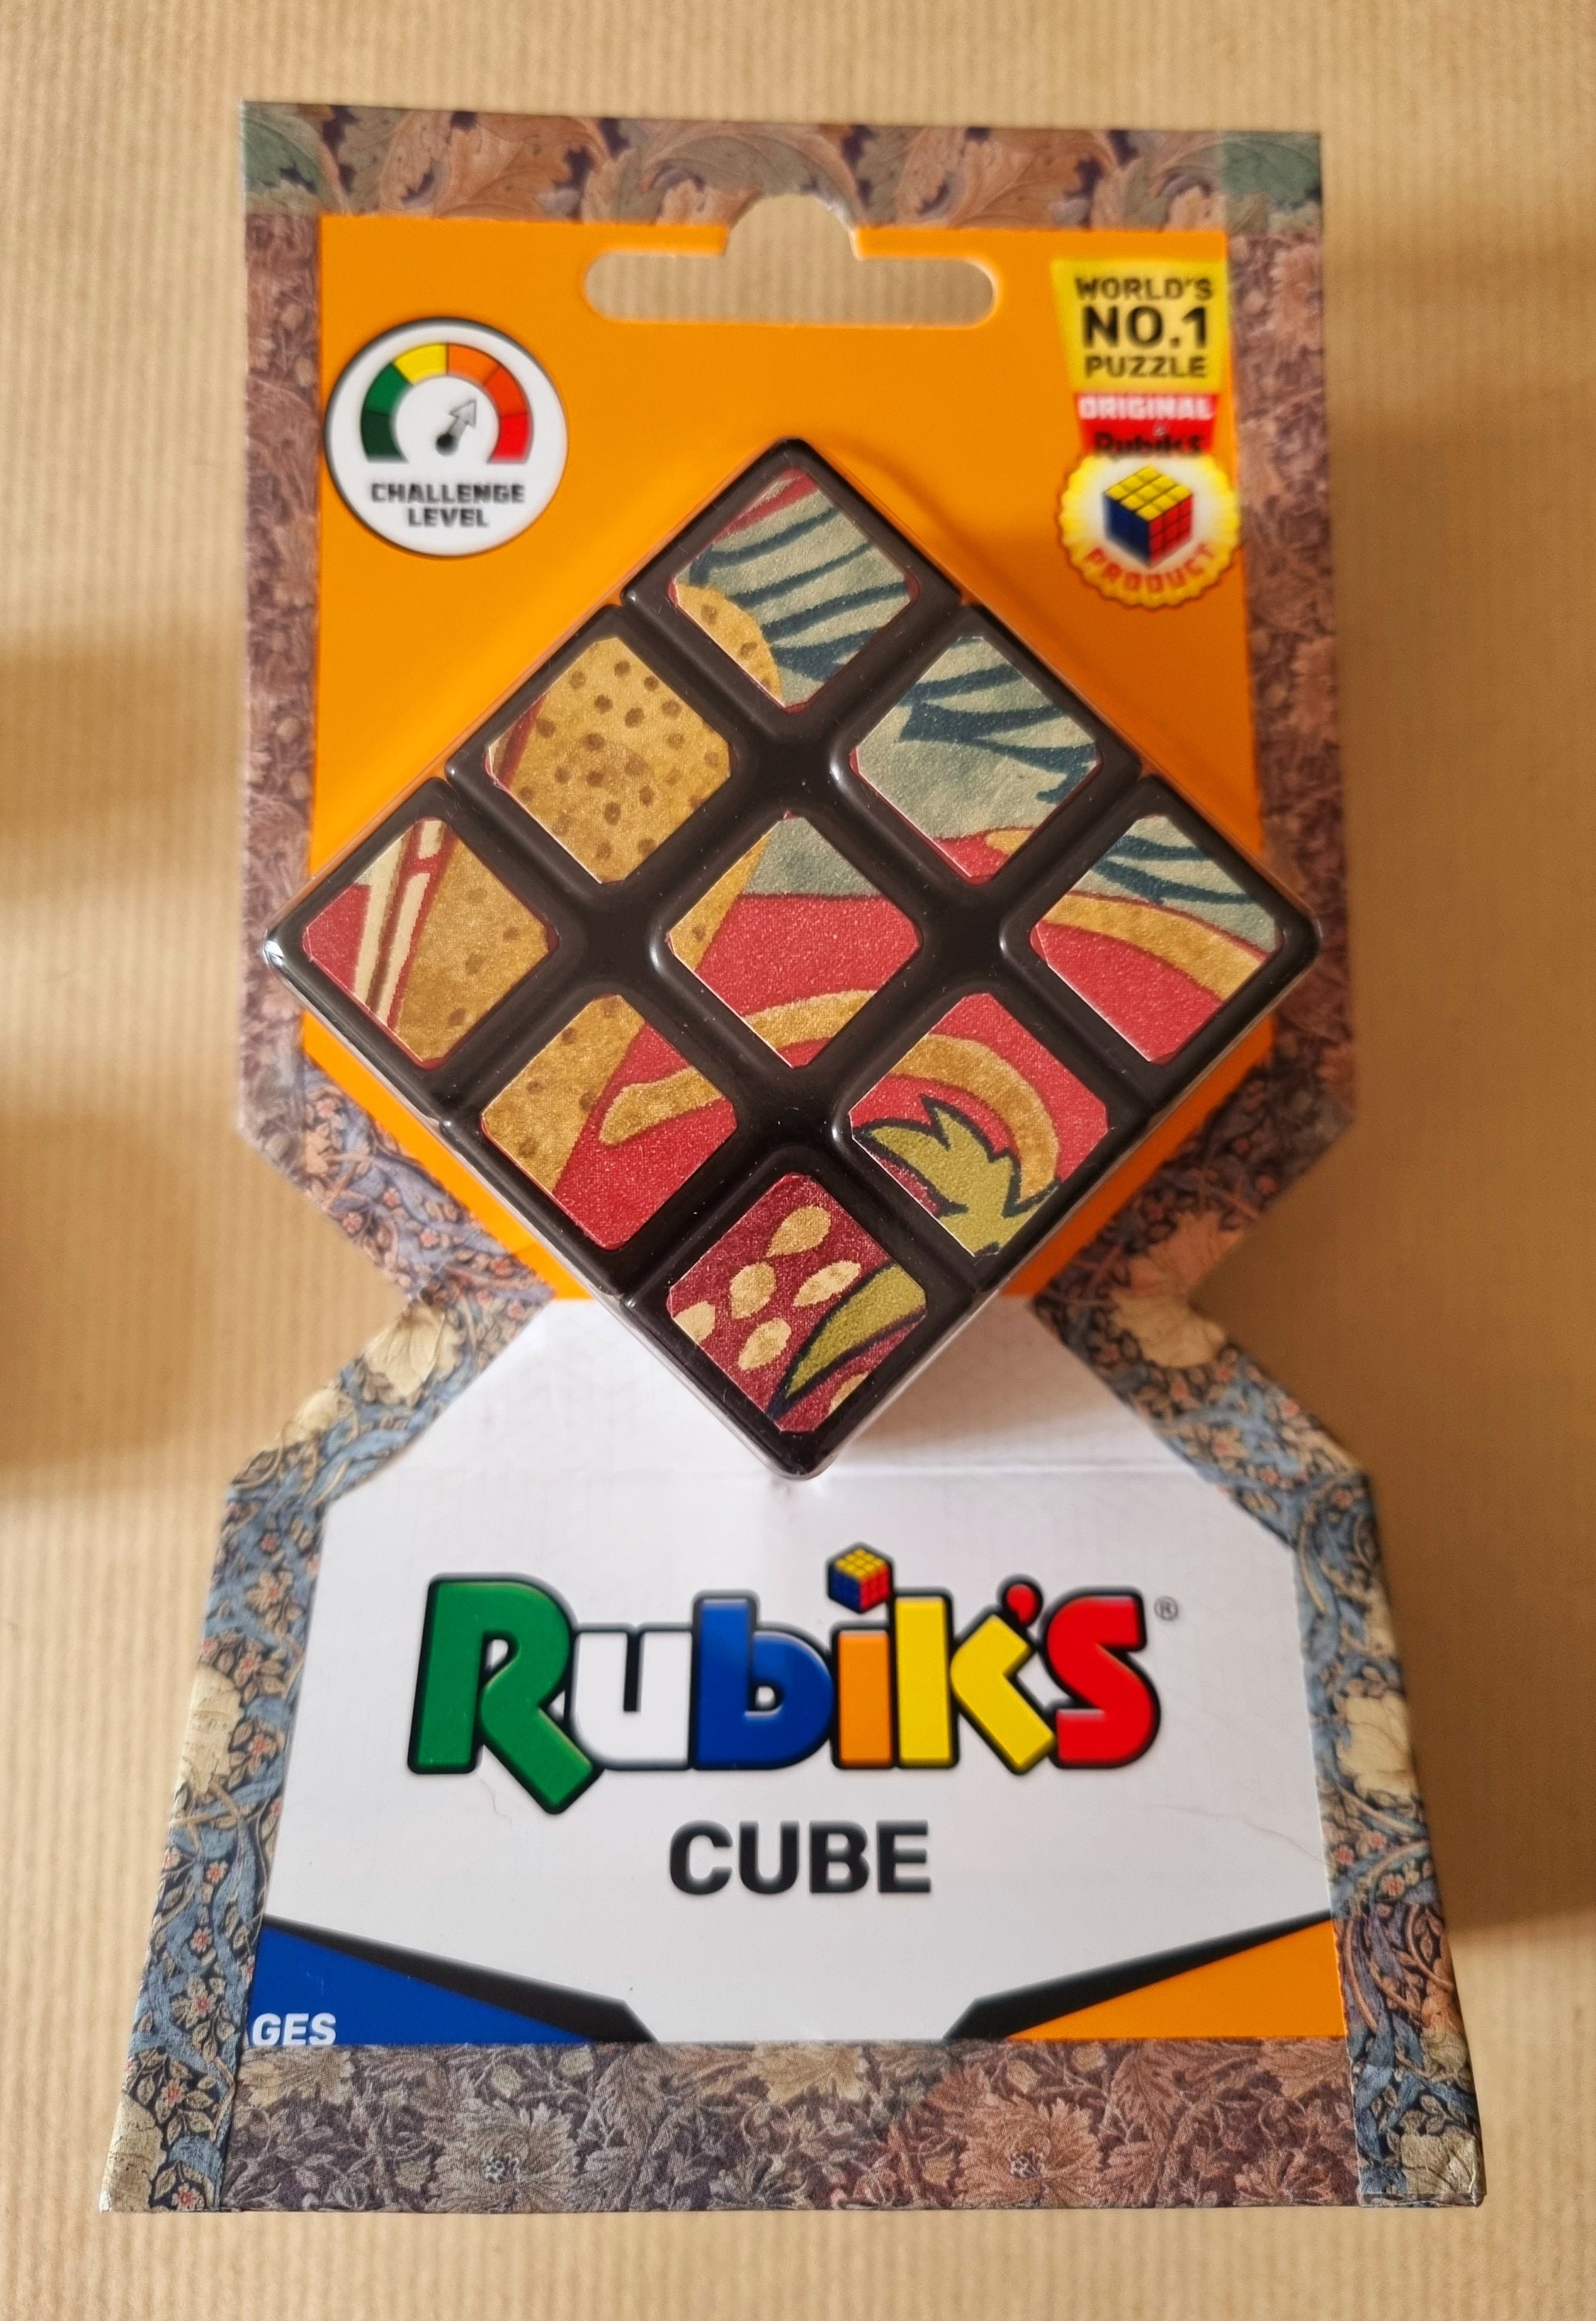 Rubik's Cube 3x3 Winning Moves Games Brand New Sealed NIB “CLASSIC